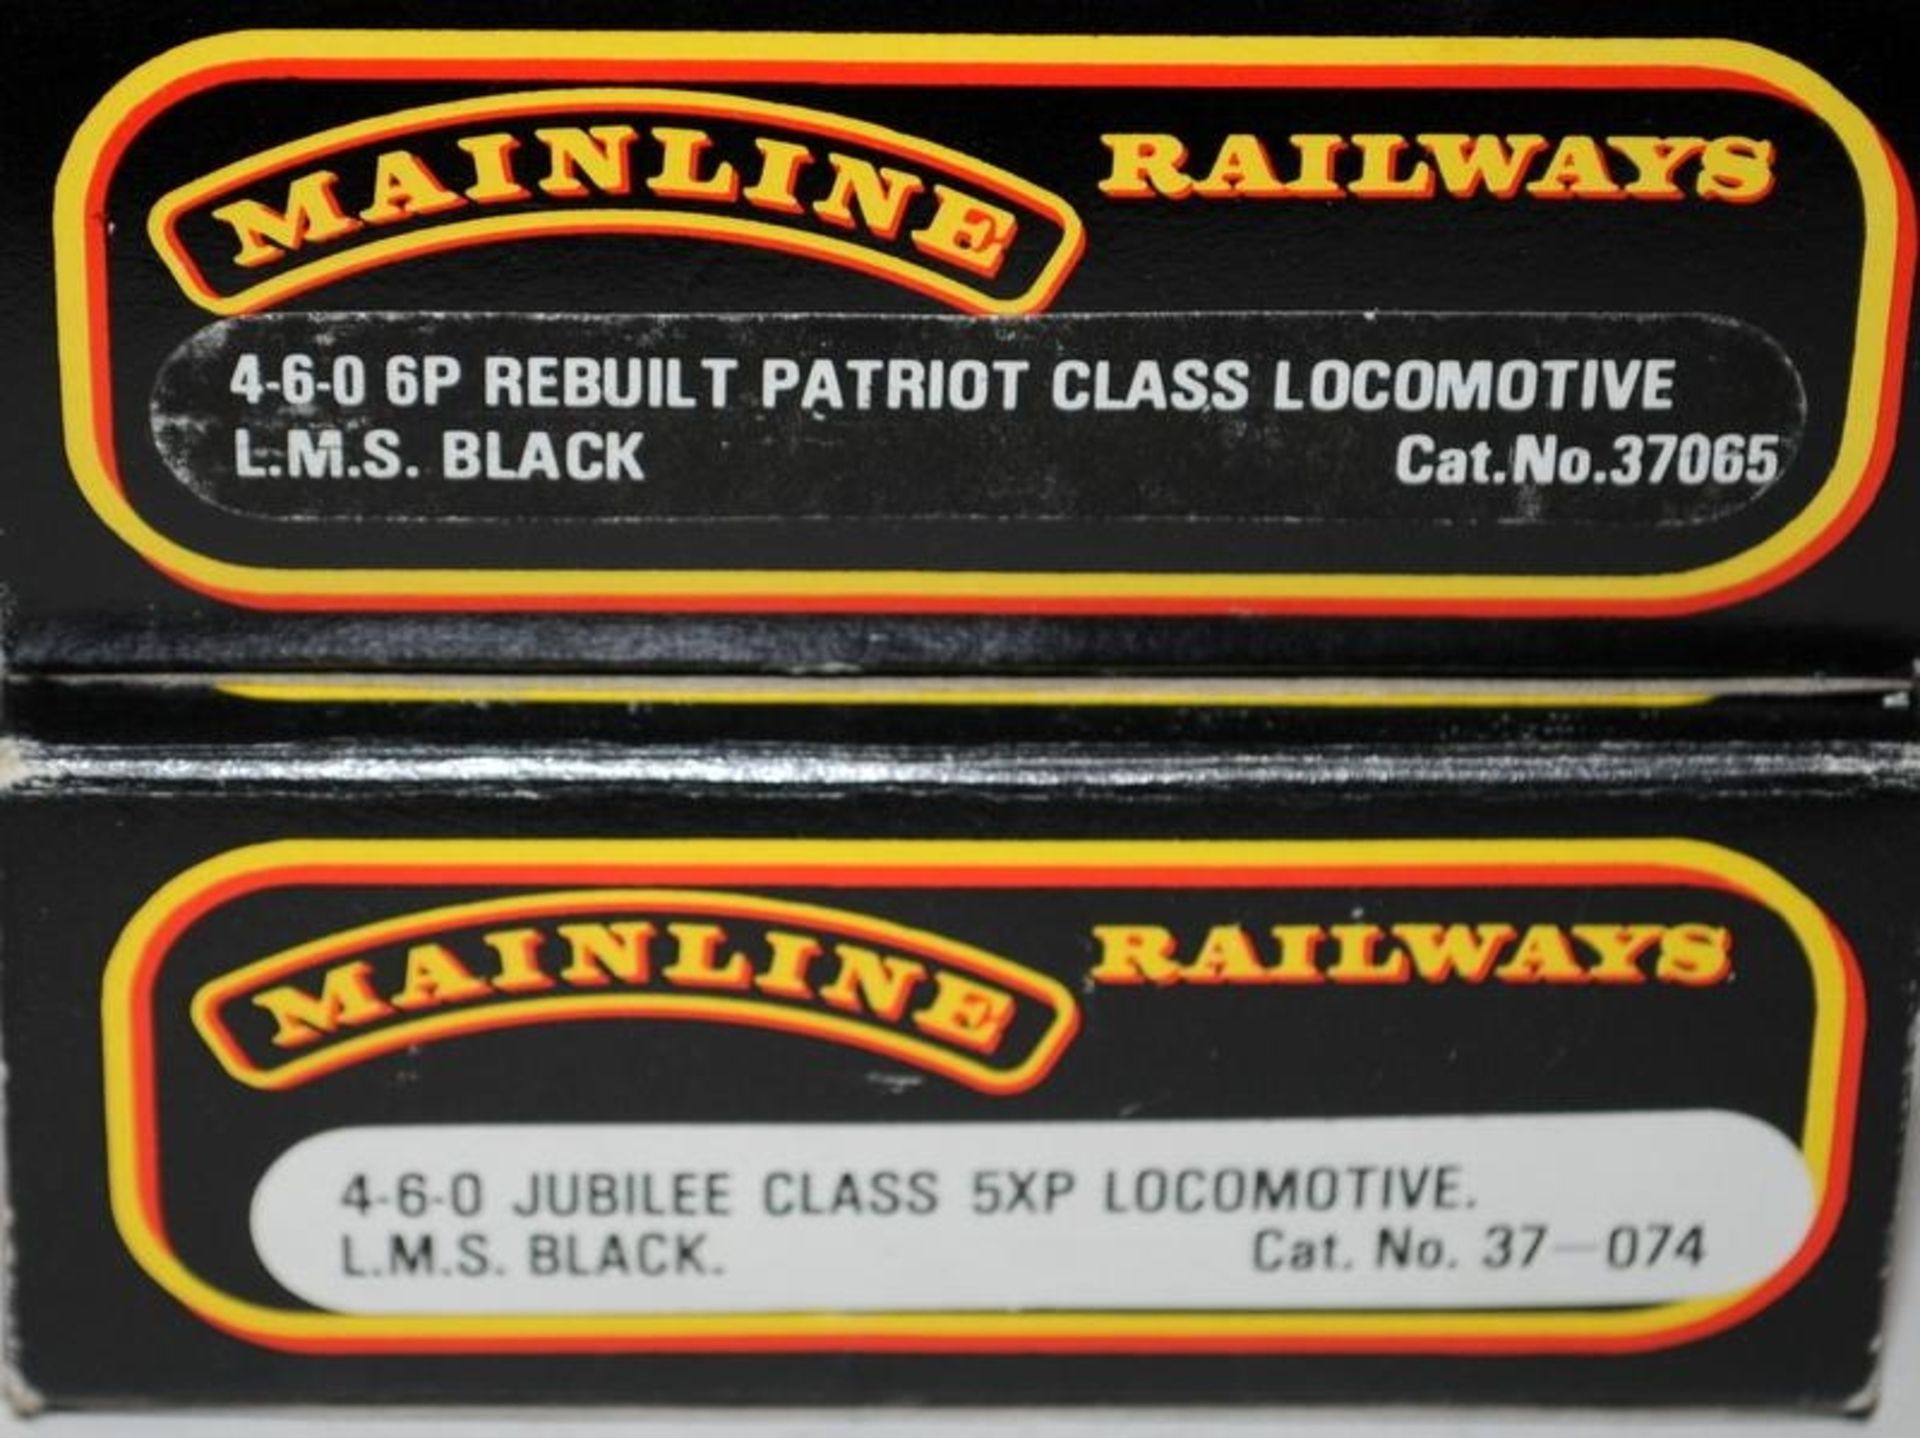 Mainline Railways OO gauge Patriot Class Locomotive LMS Black ref:37065 c/w Jubilee Class 5XP LMS - Image 2 of 2